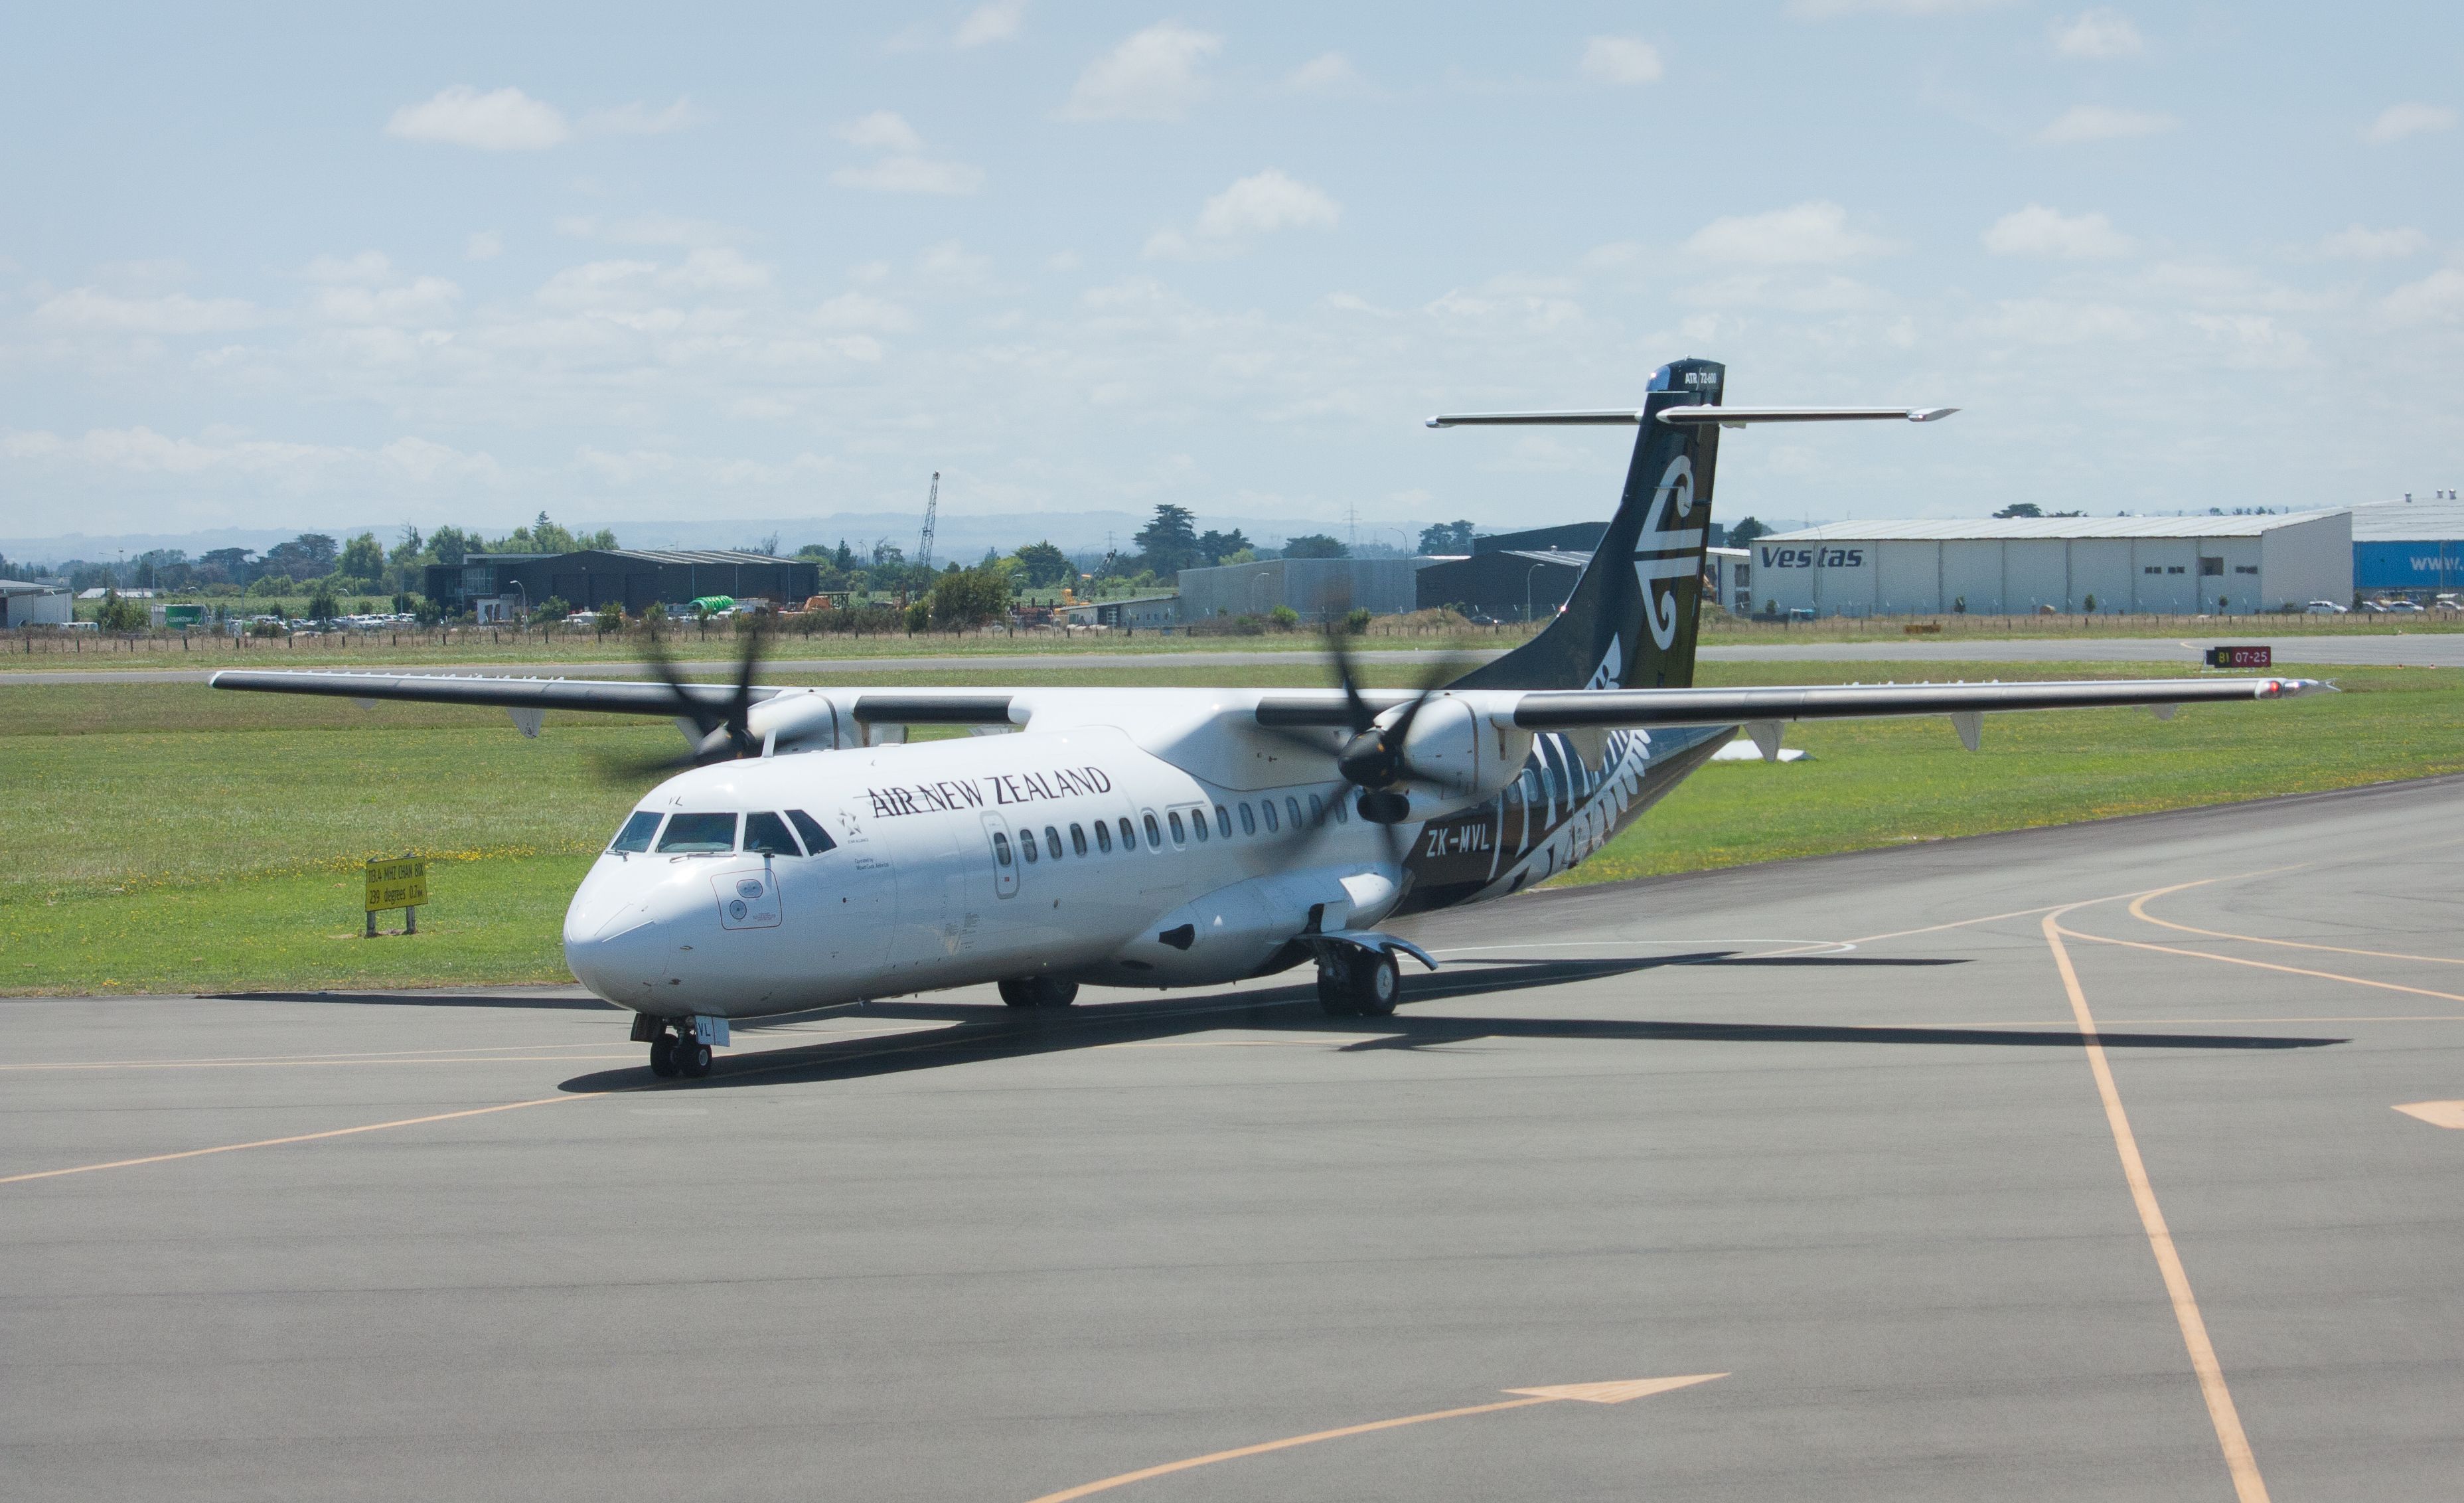 An Air New Zealand ATR72 after landing at Palmerston North airport.